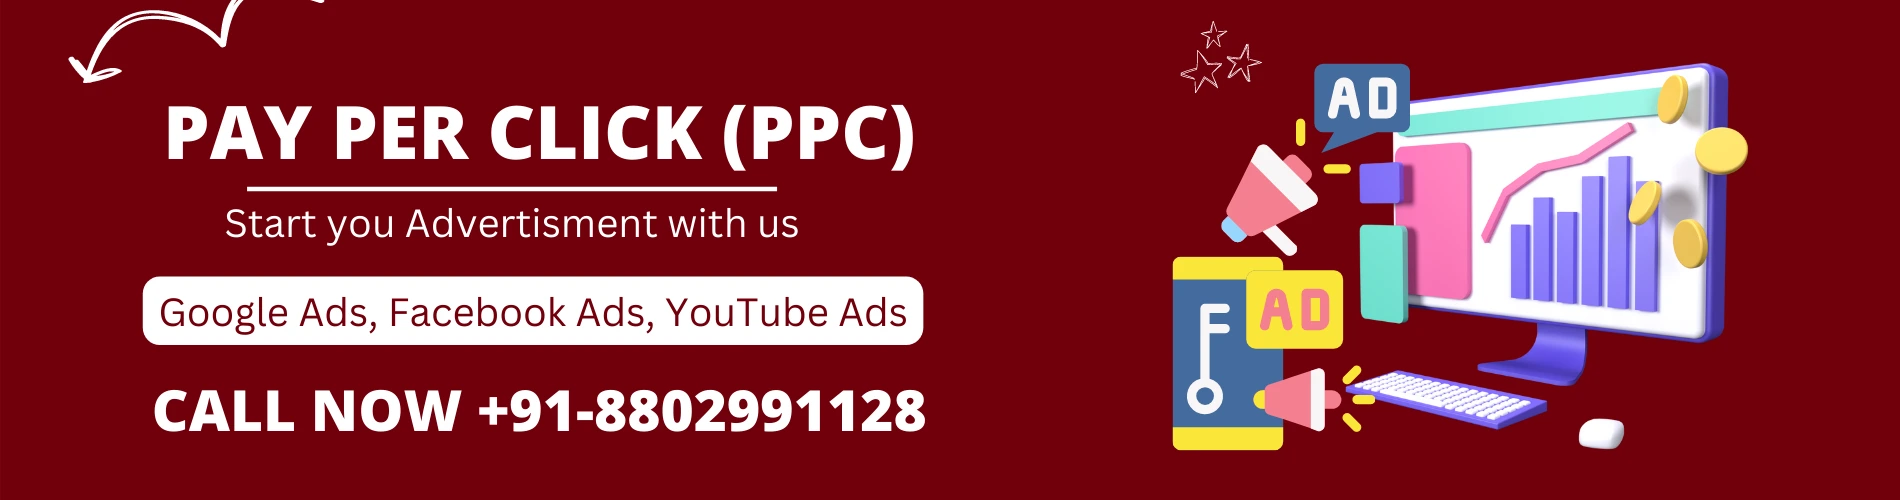 Host Digital marketing - HDM PPC banner